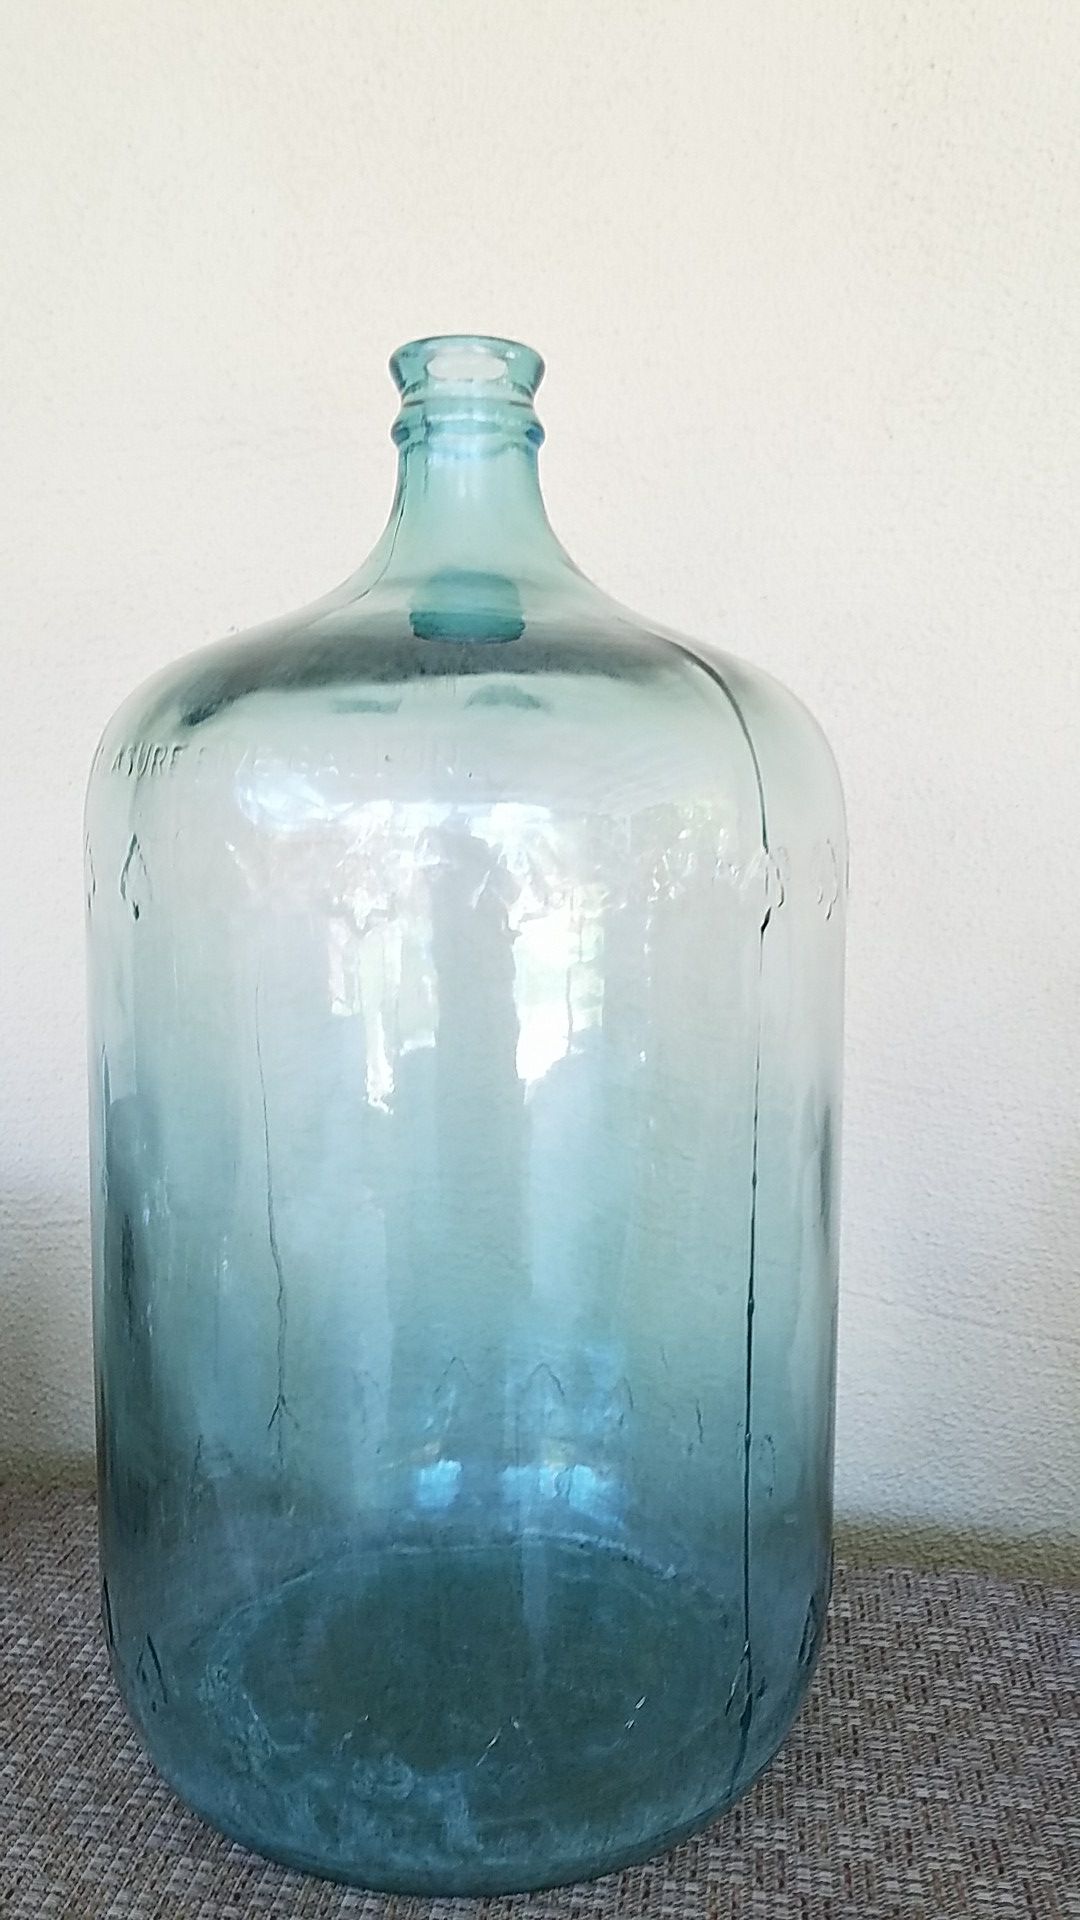 Ascot Wish bottle kettle for Sale in Riverbank, CA - OfferUp